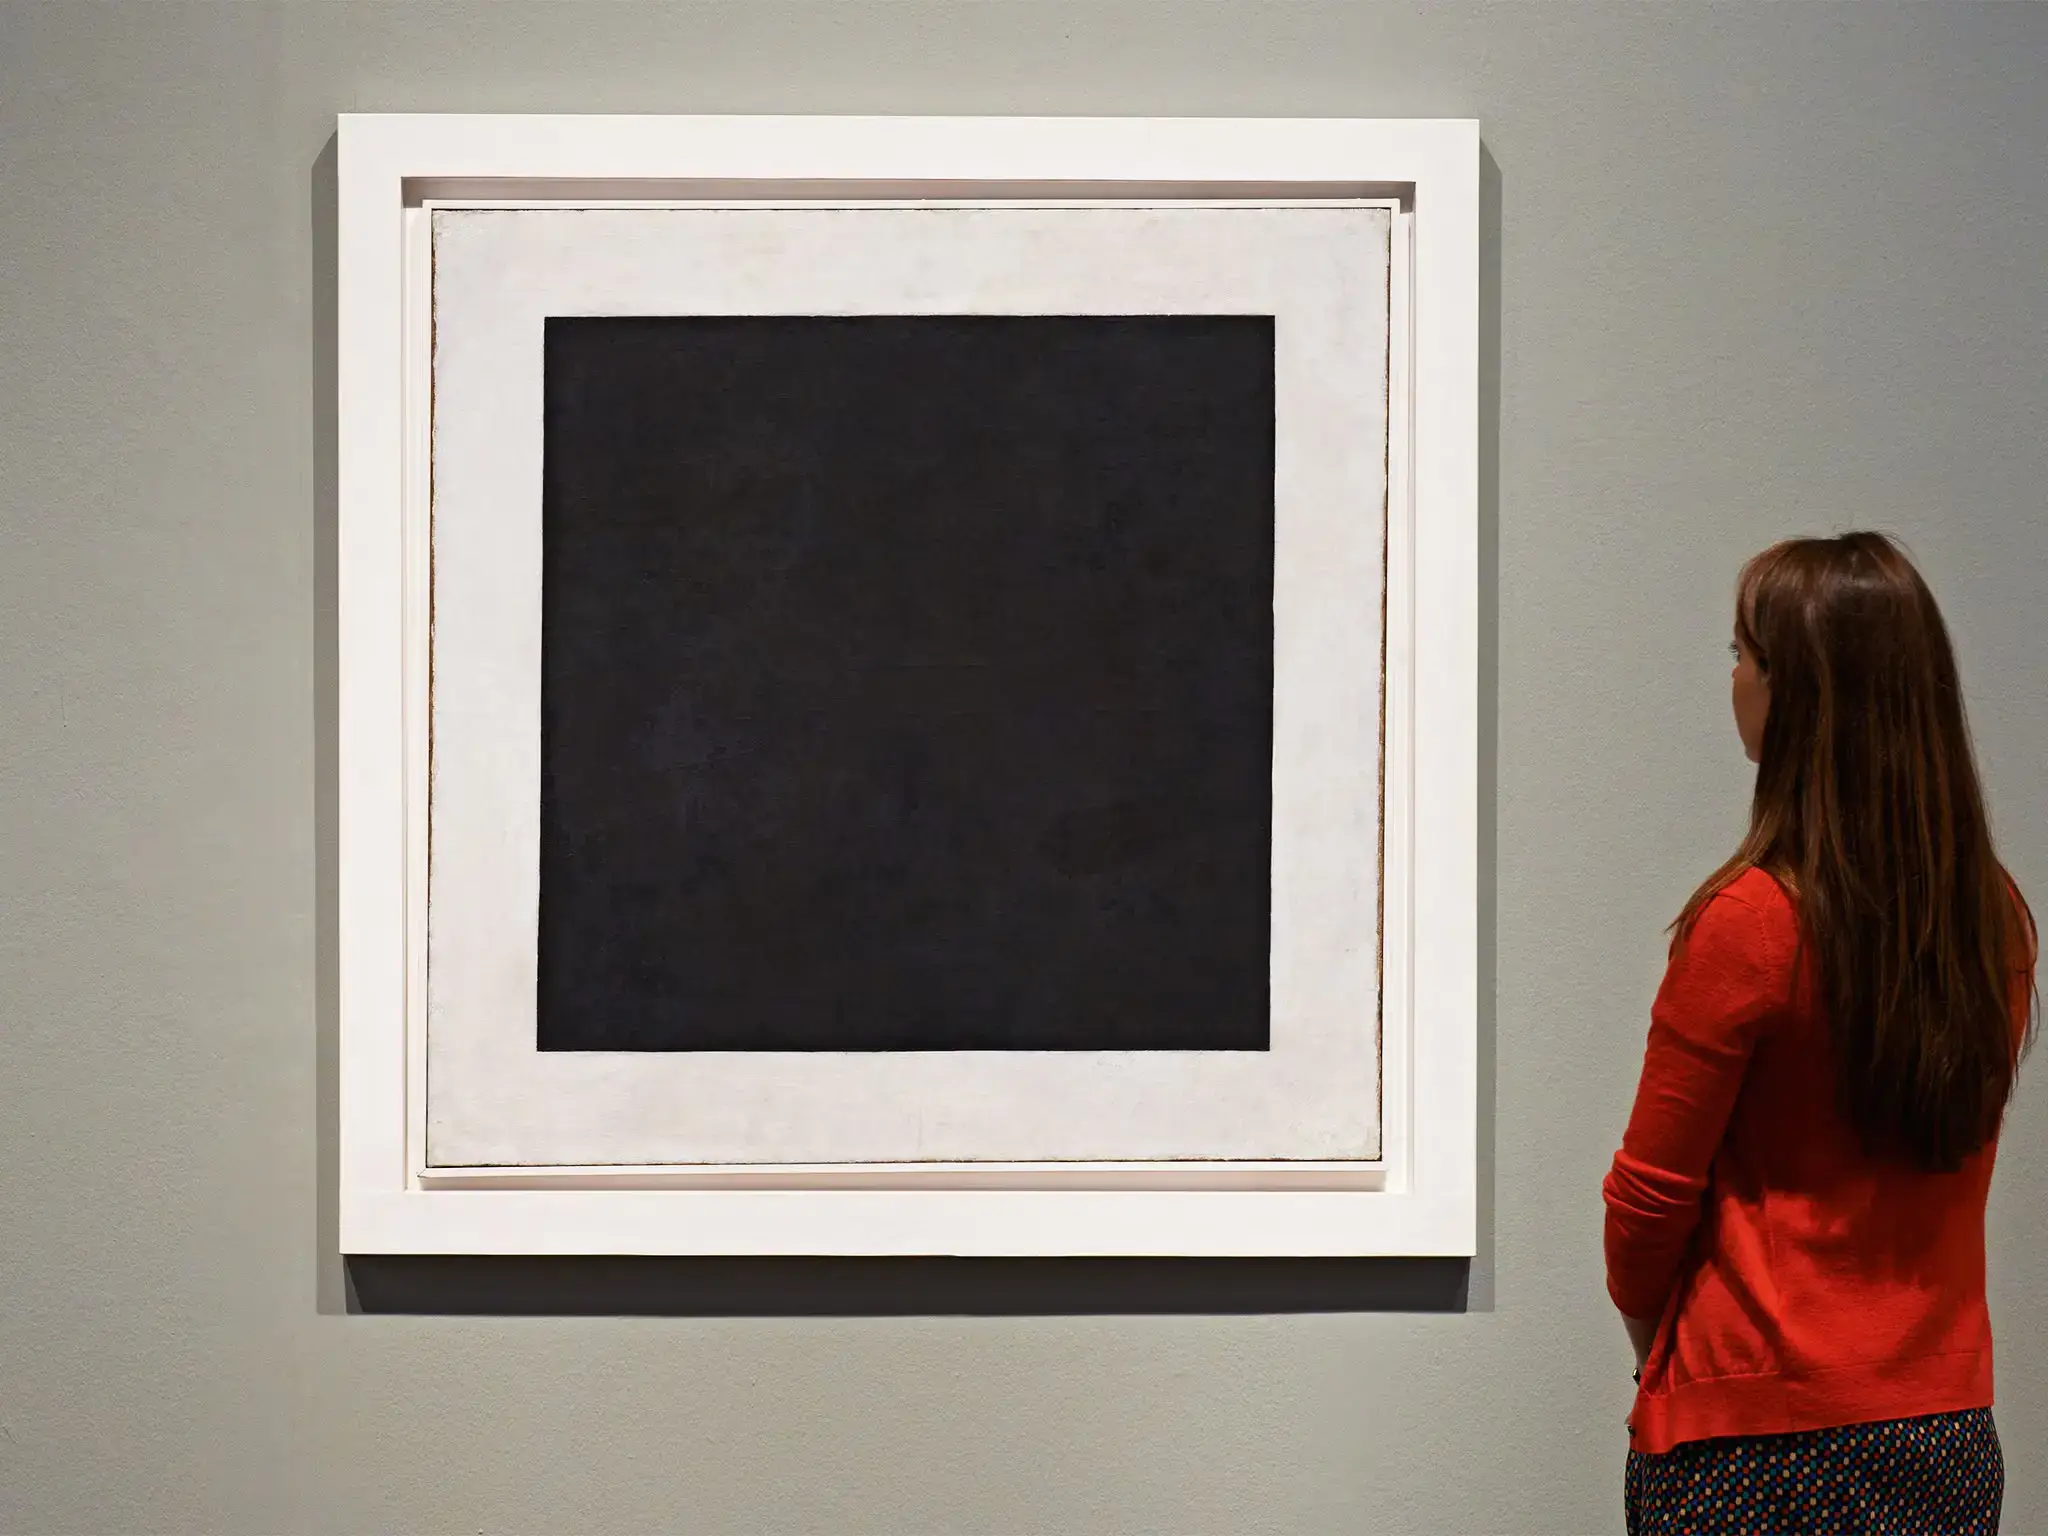 Kazimir Malevich's "Black Square" (1915)